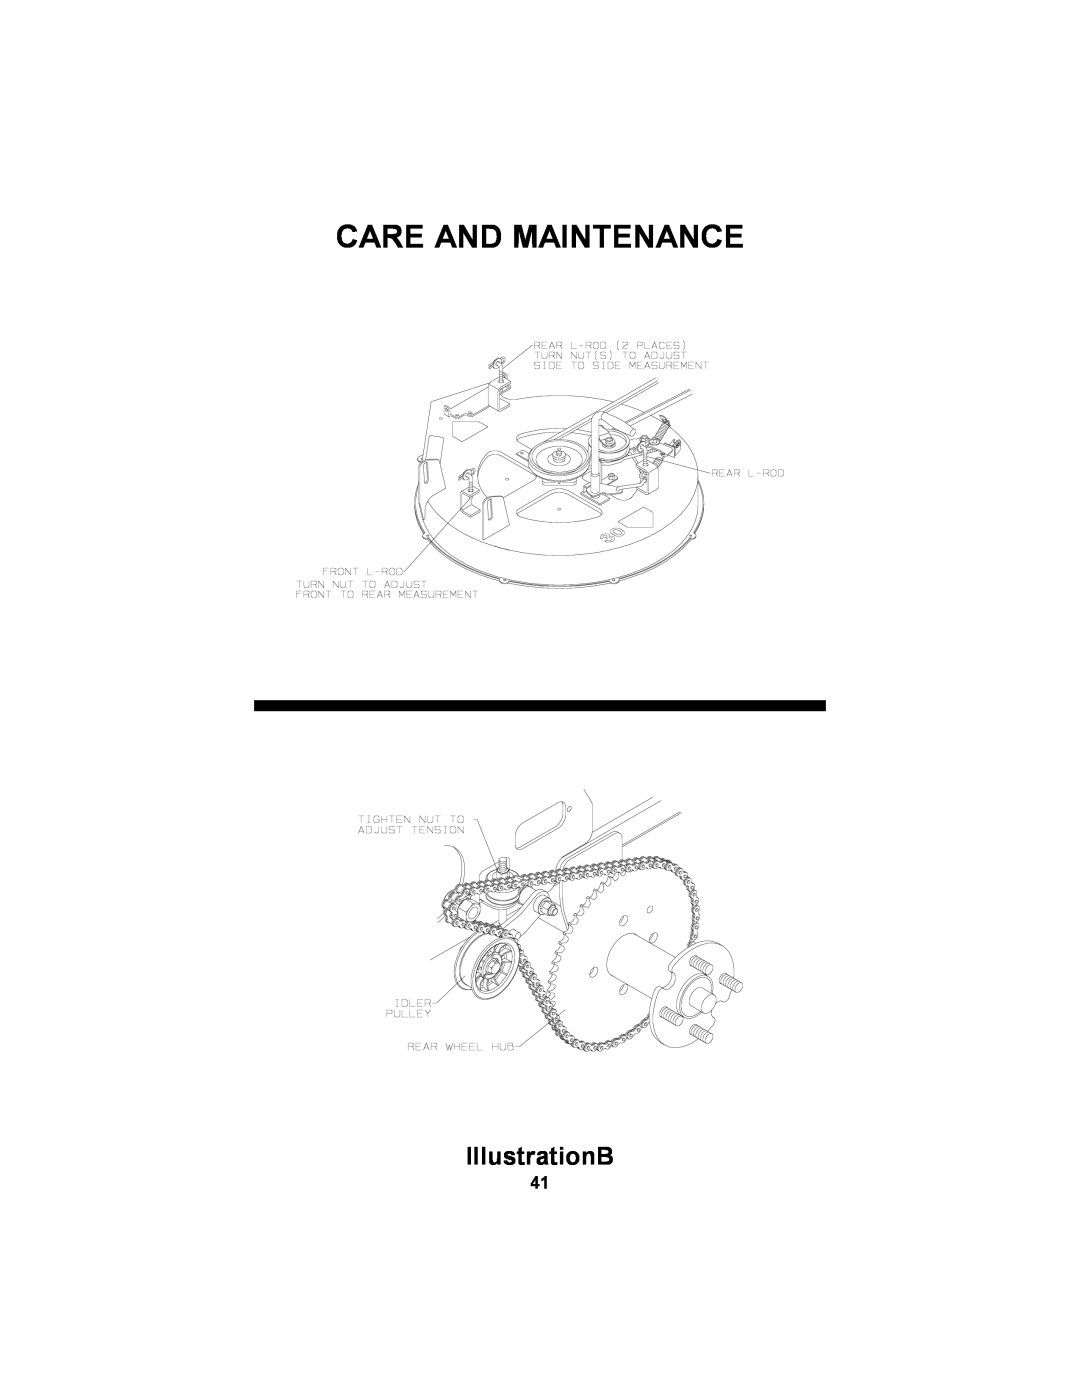 Dixon 14295-1005 manual IllustrationB, Care And Maintenance 